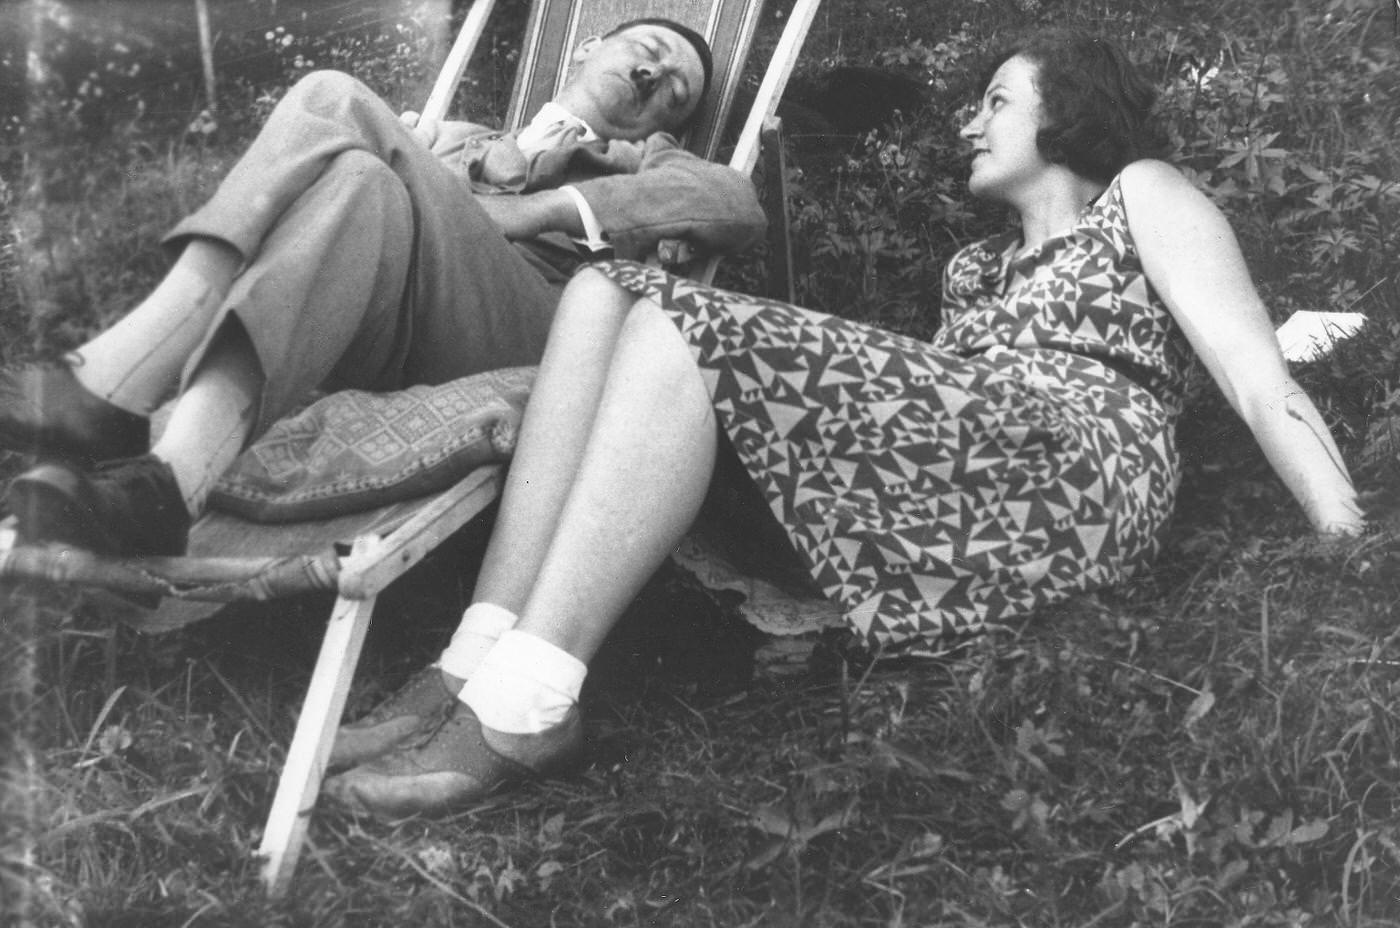 Adolf Hitler (left) sitting next to his niece Angela (Geli) Raubal in a deck chair, 1930